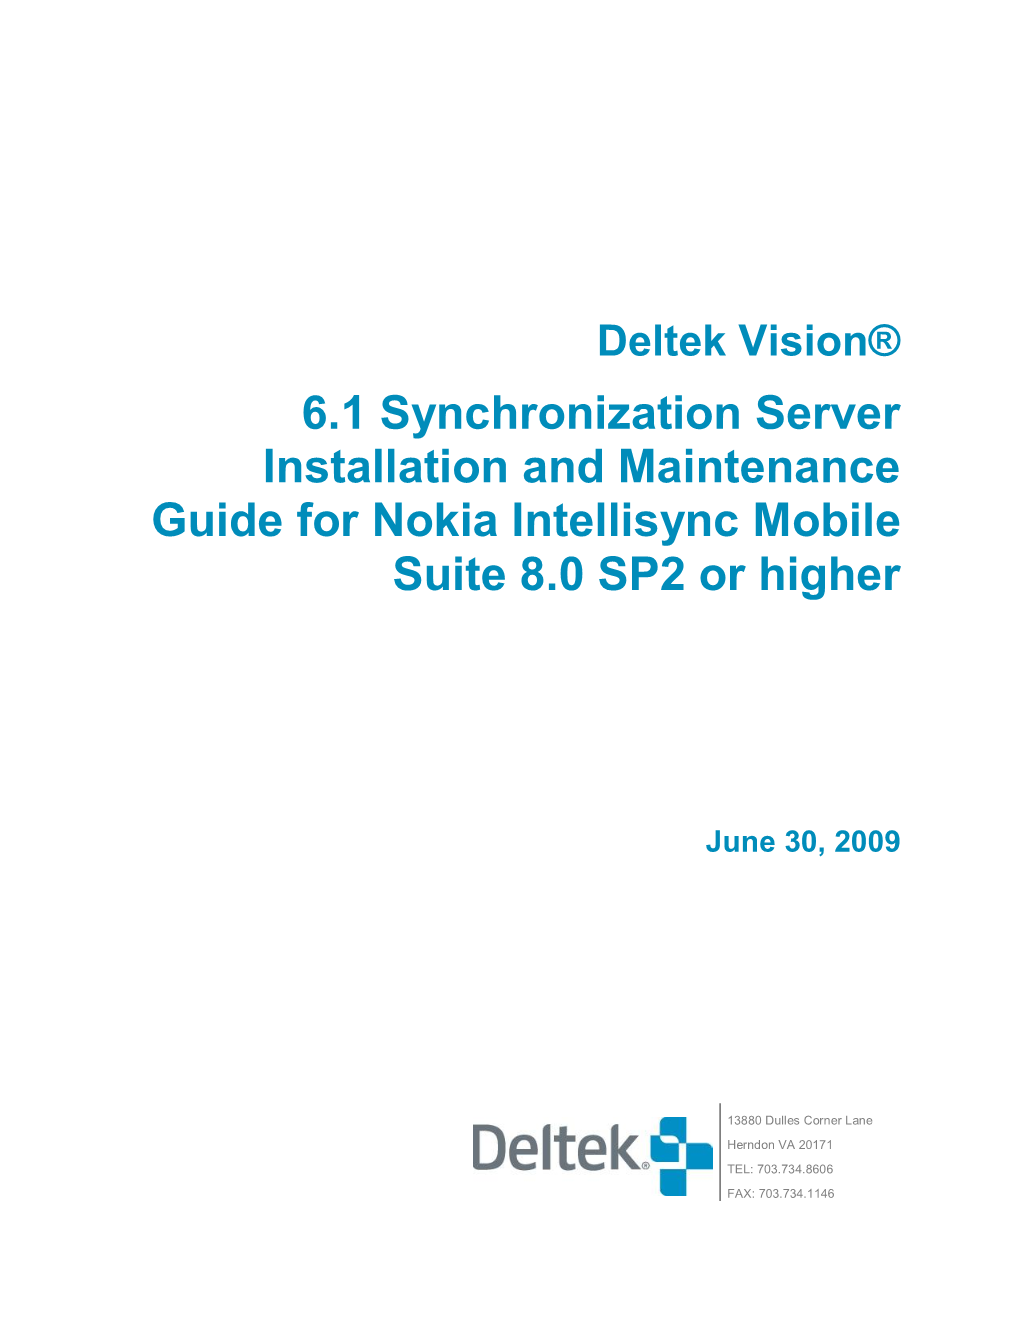 Deltek Vision 6.1 Synchronization Server Installation And